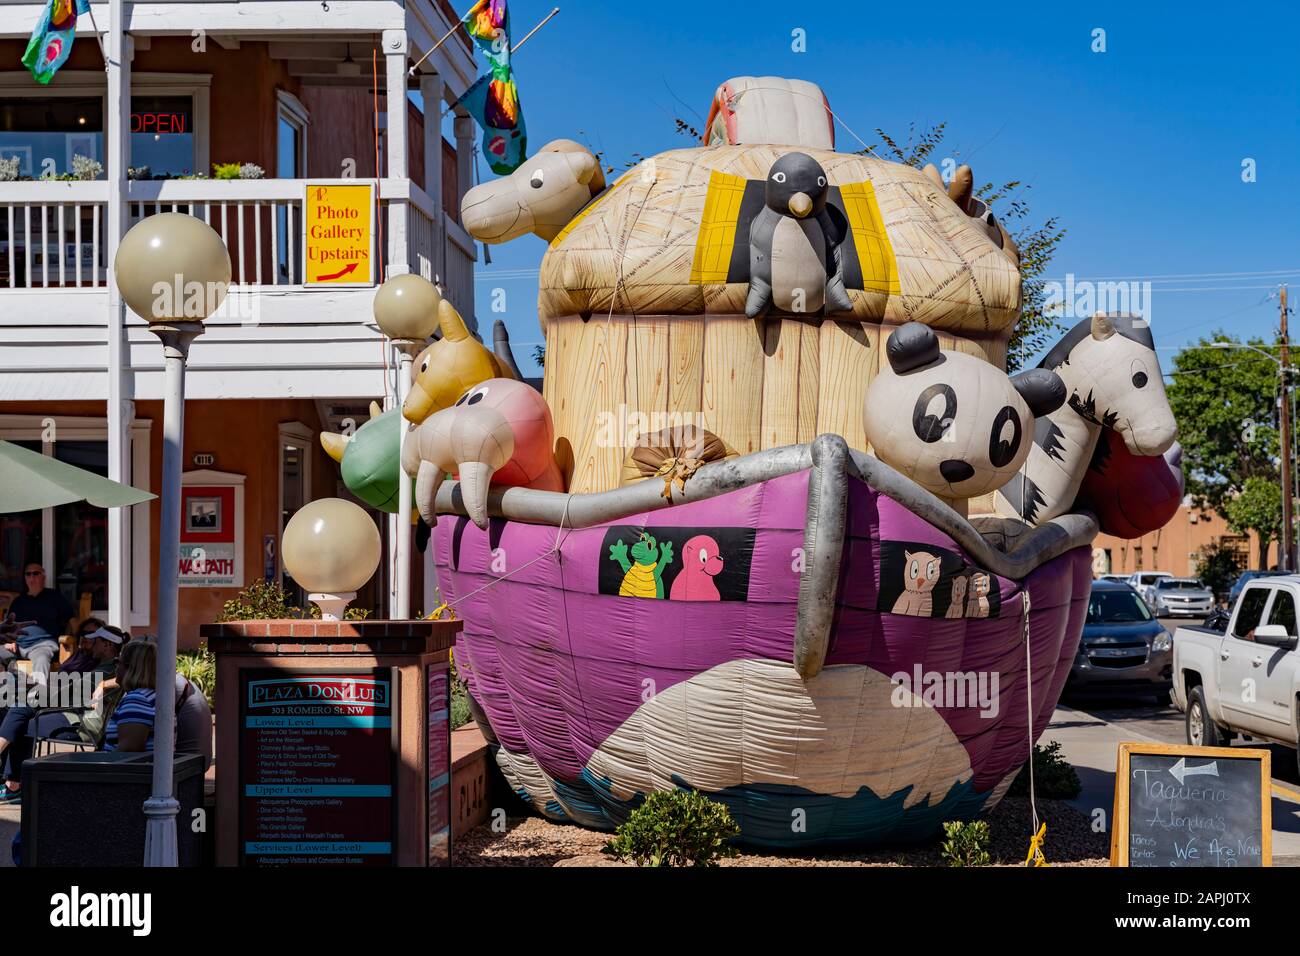 Albuquerque, 5 DE OCTUBRE: Gran juguete inflable en Plaza Don Luis el 5 DE OCTUBRE de 2019 en Albuquerque, Nuevo México Foto de stock